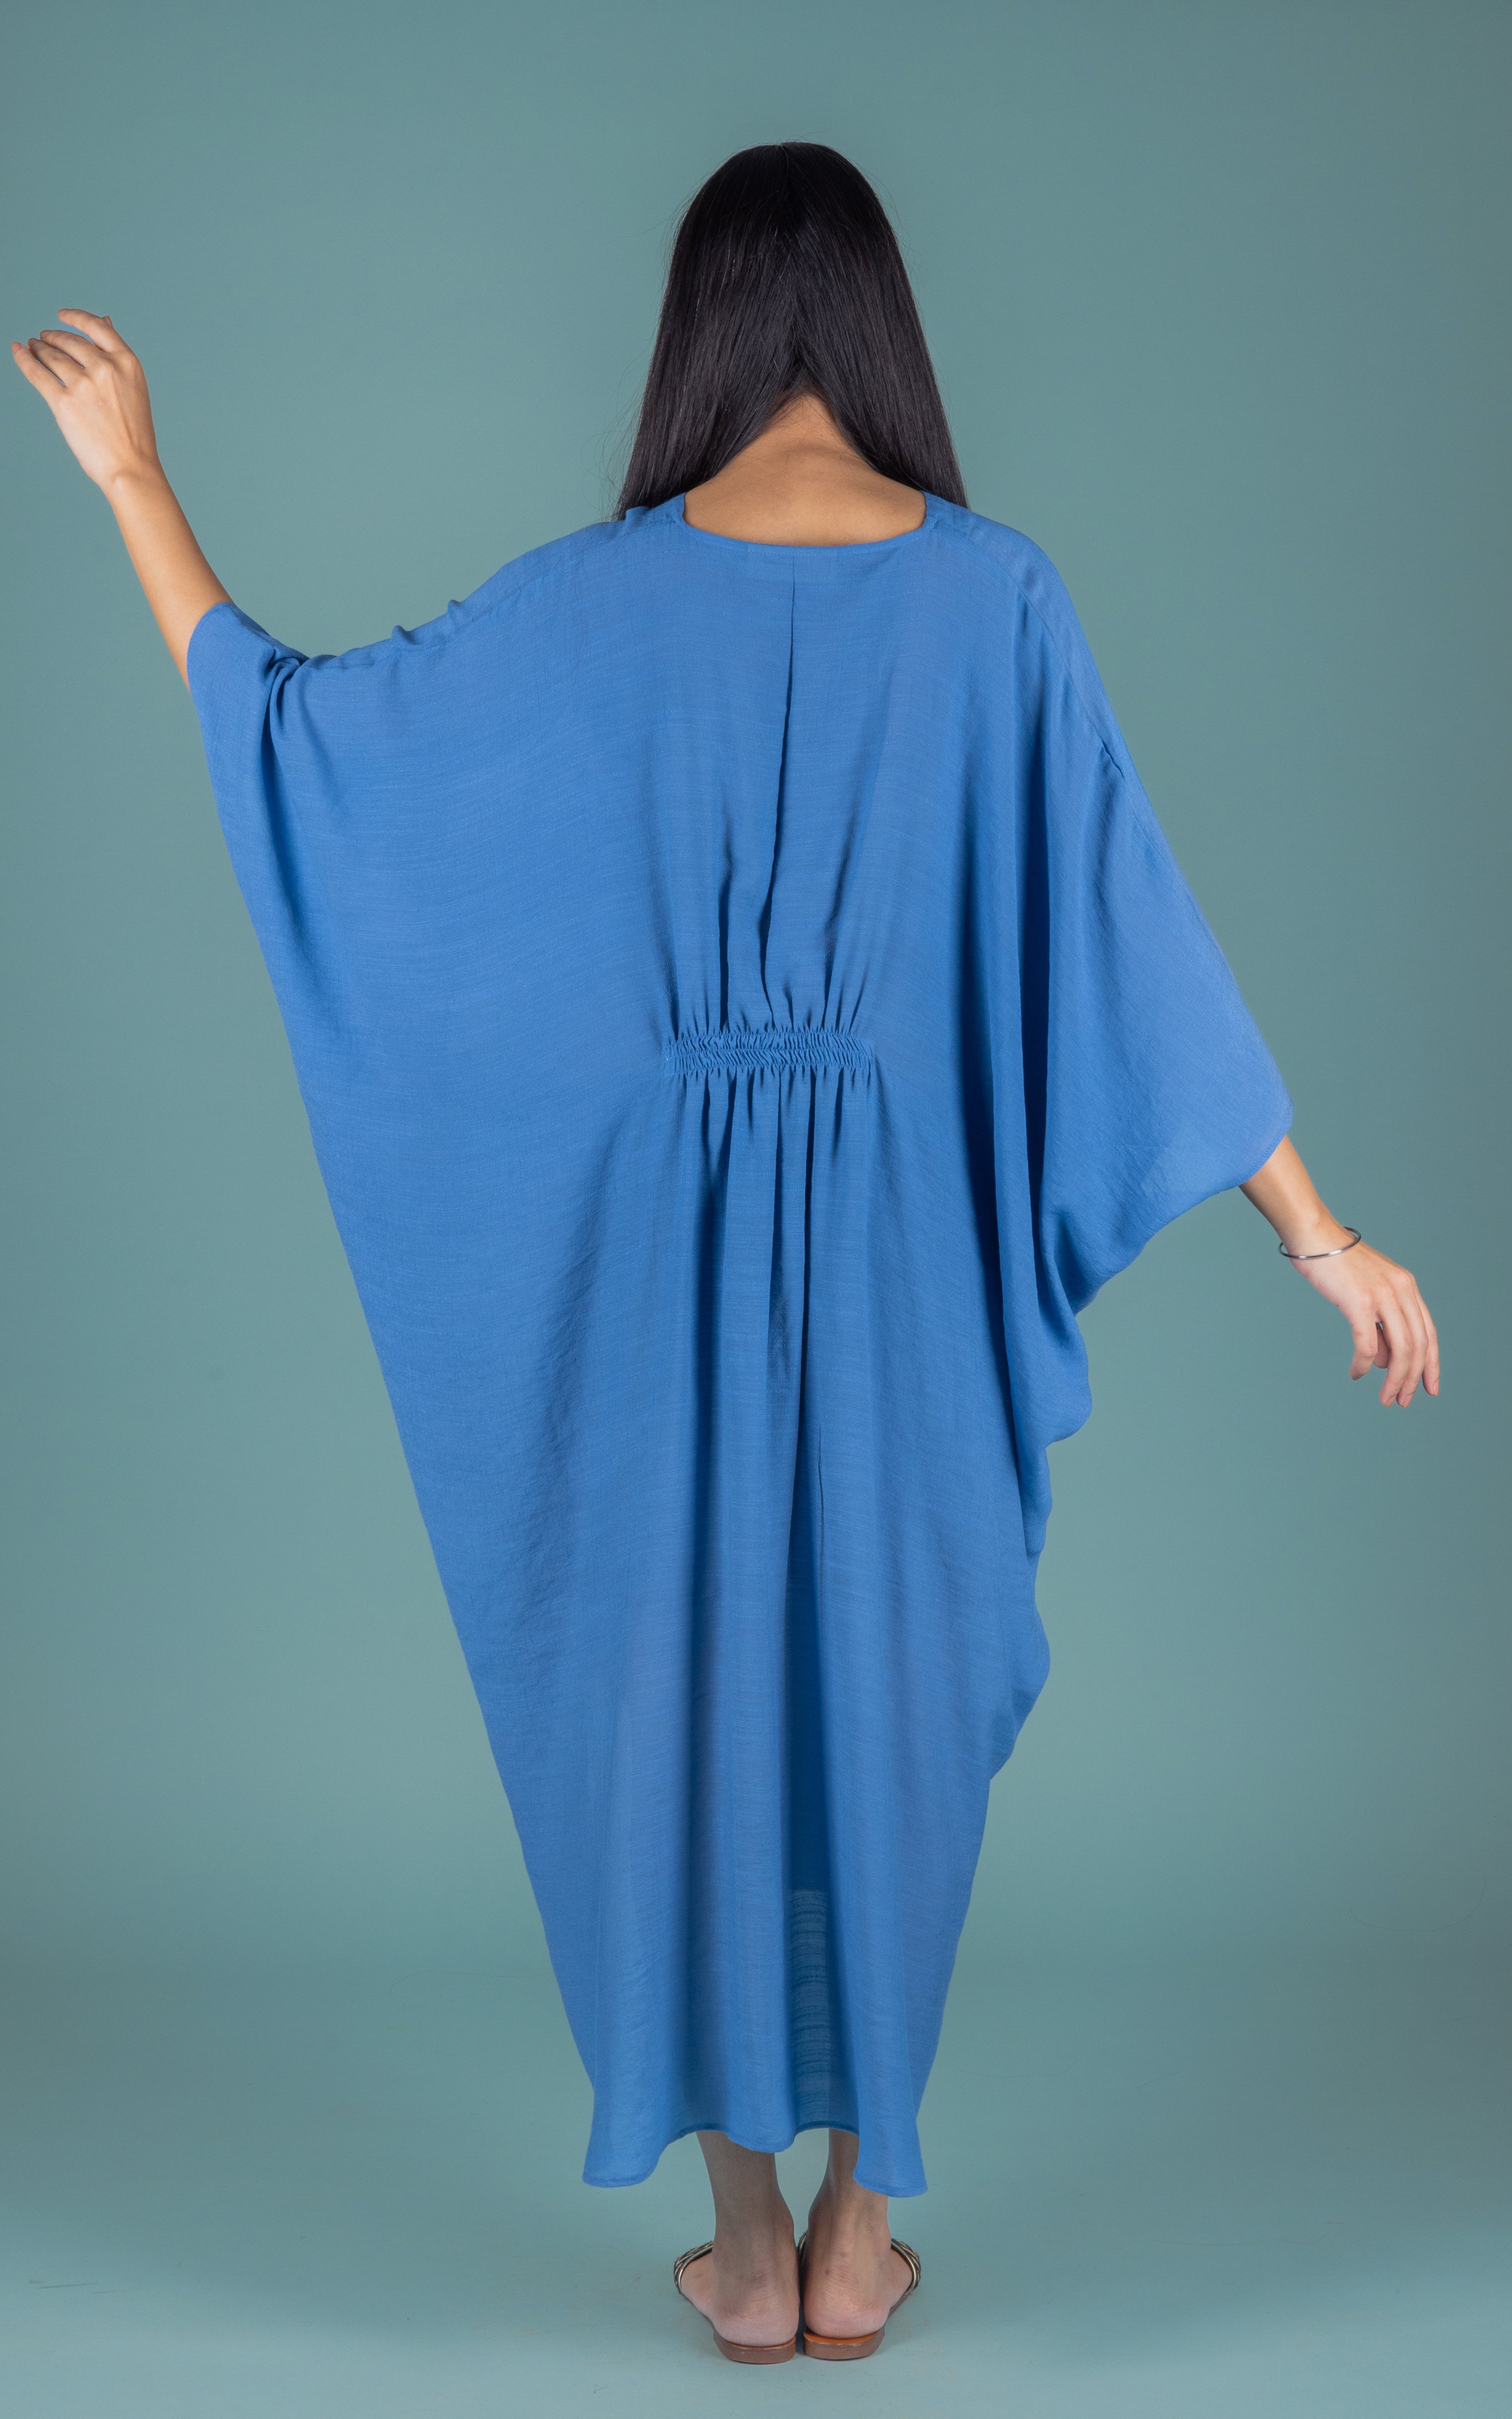 Tufts Blue Dress